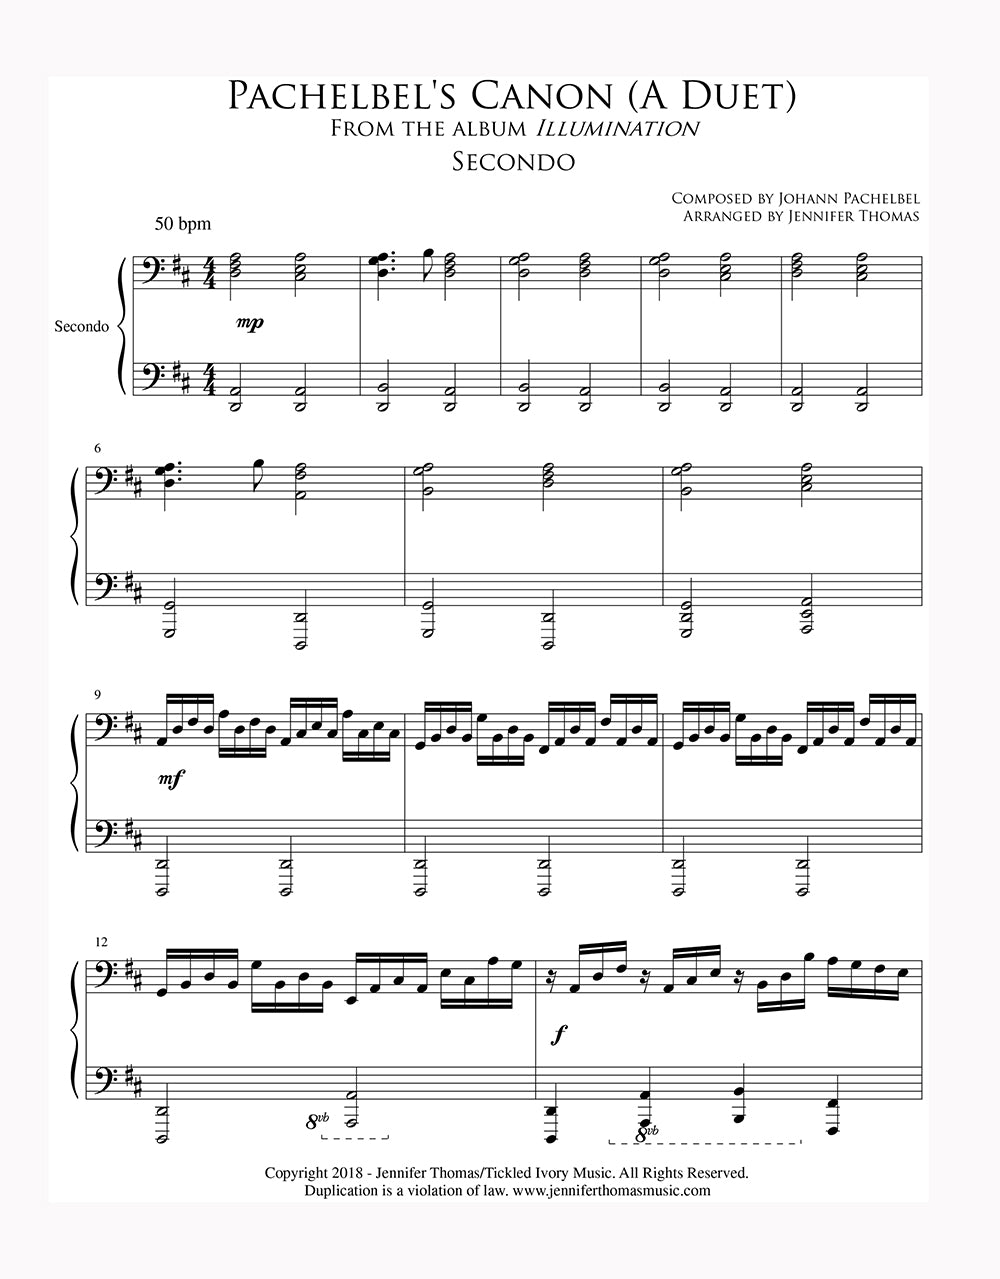 Canon de Pachelbel (a dúo) para 4 manos, 1 piano